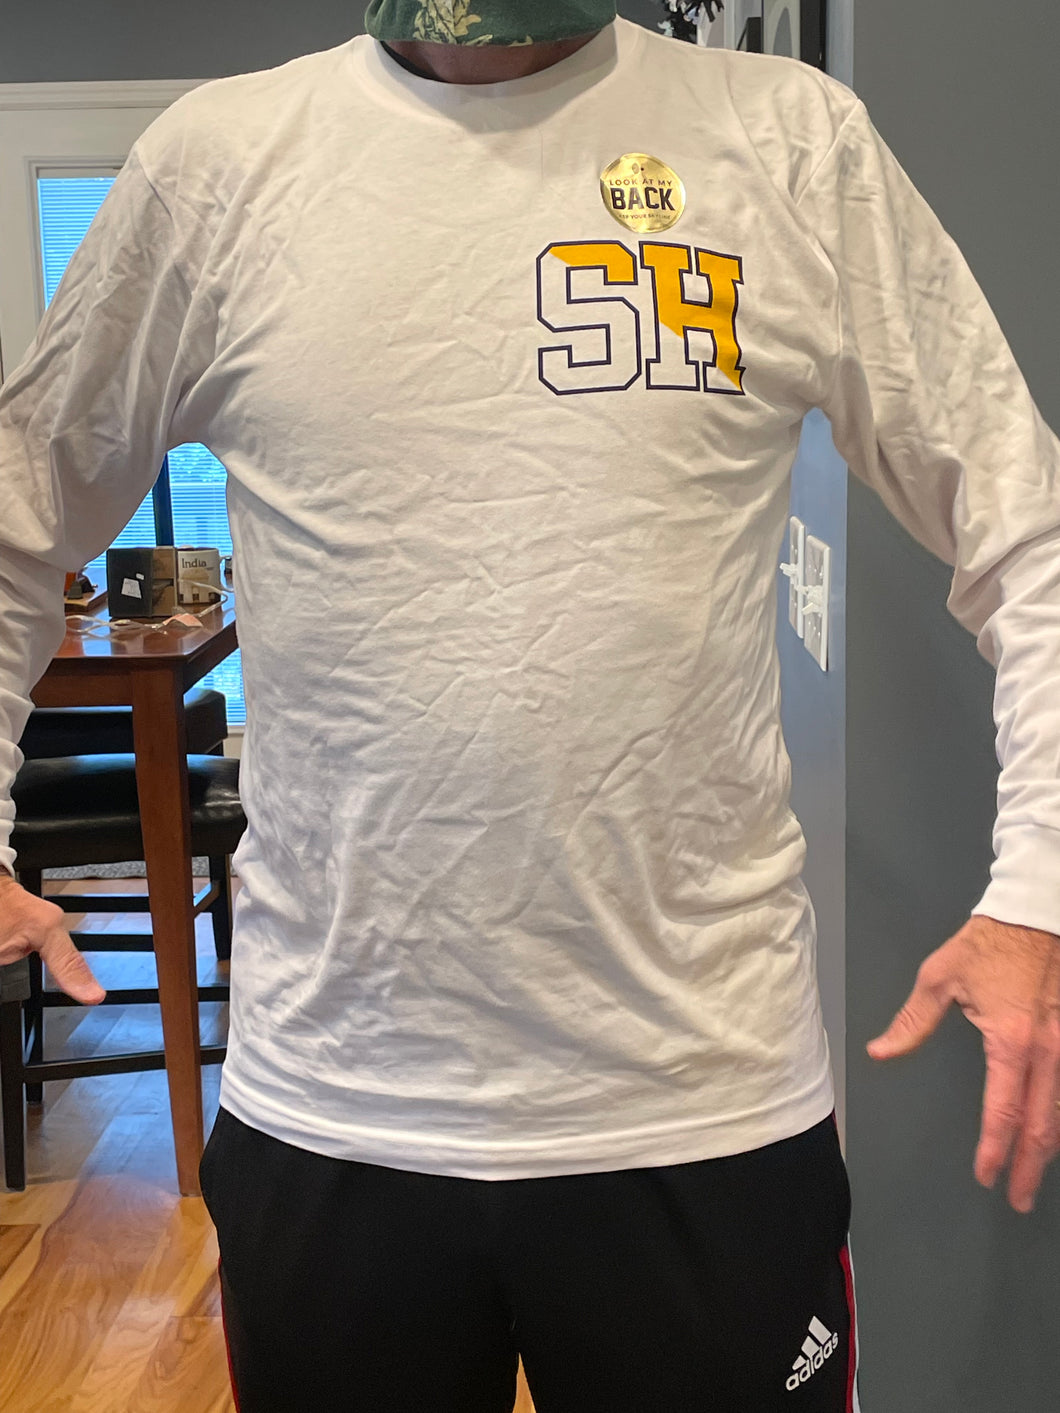 Men's/Unisex long sleeve t-shirt - design on both sides